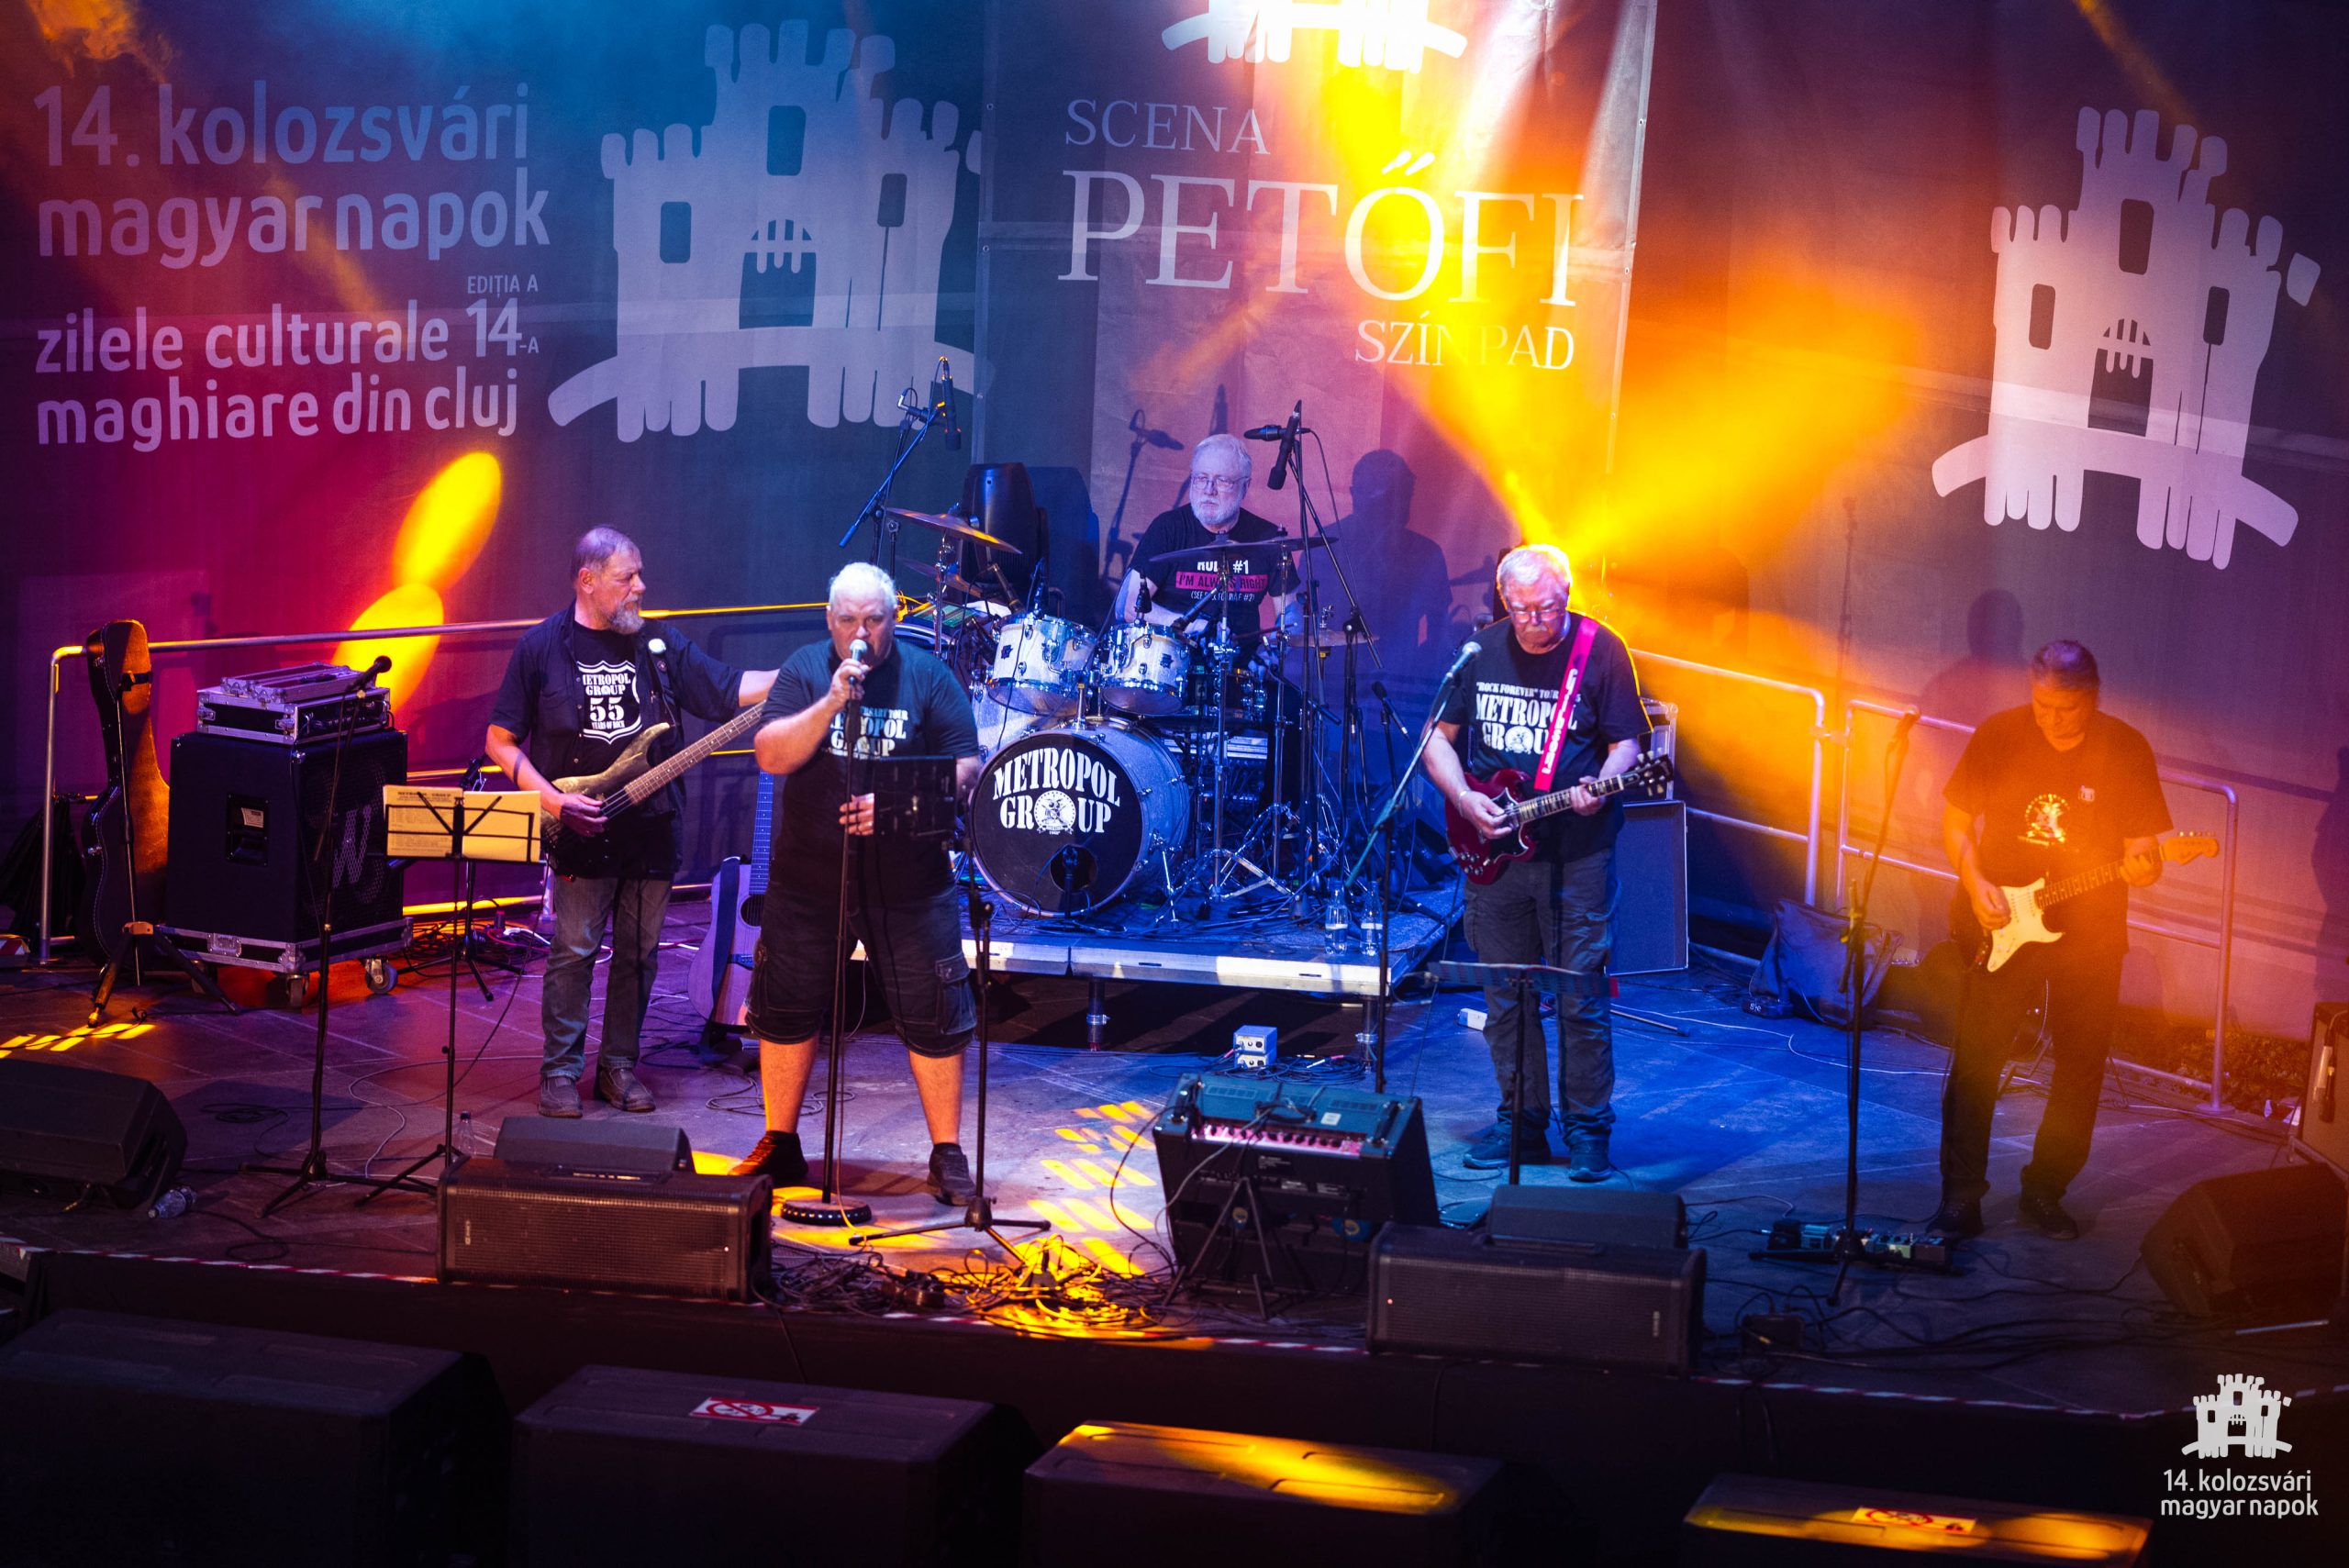 Concert Metropol Group: 55 Years of Rock